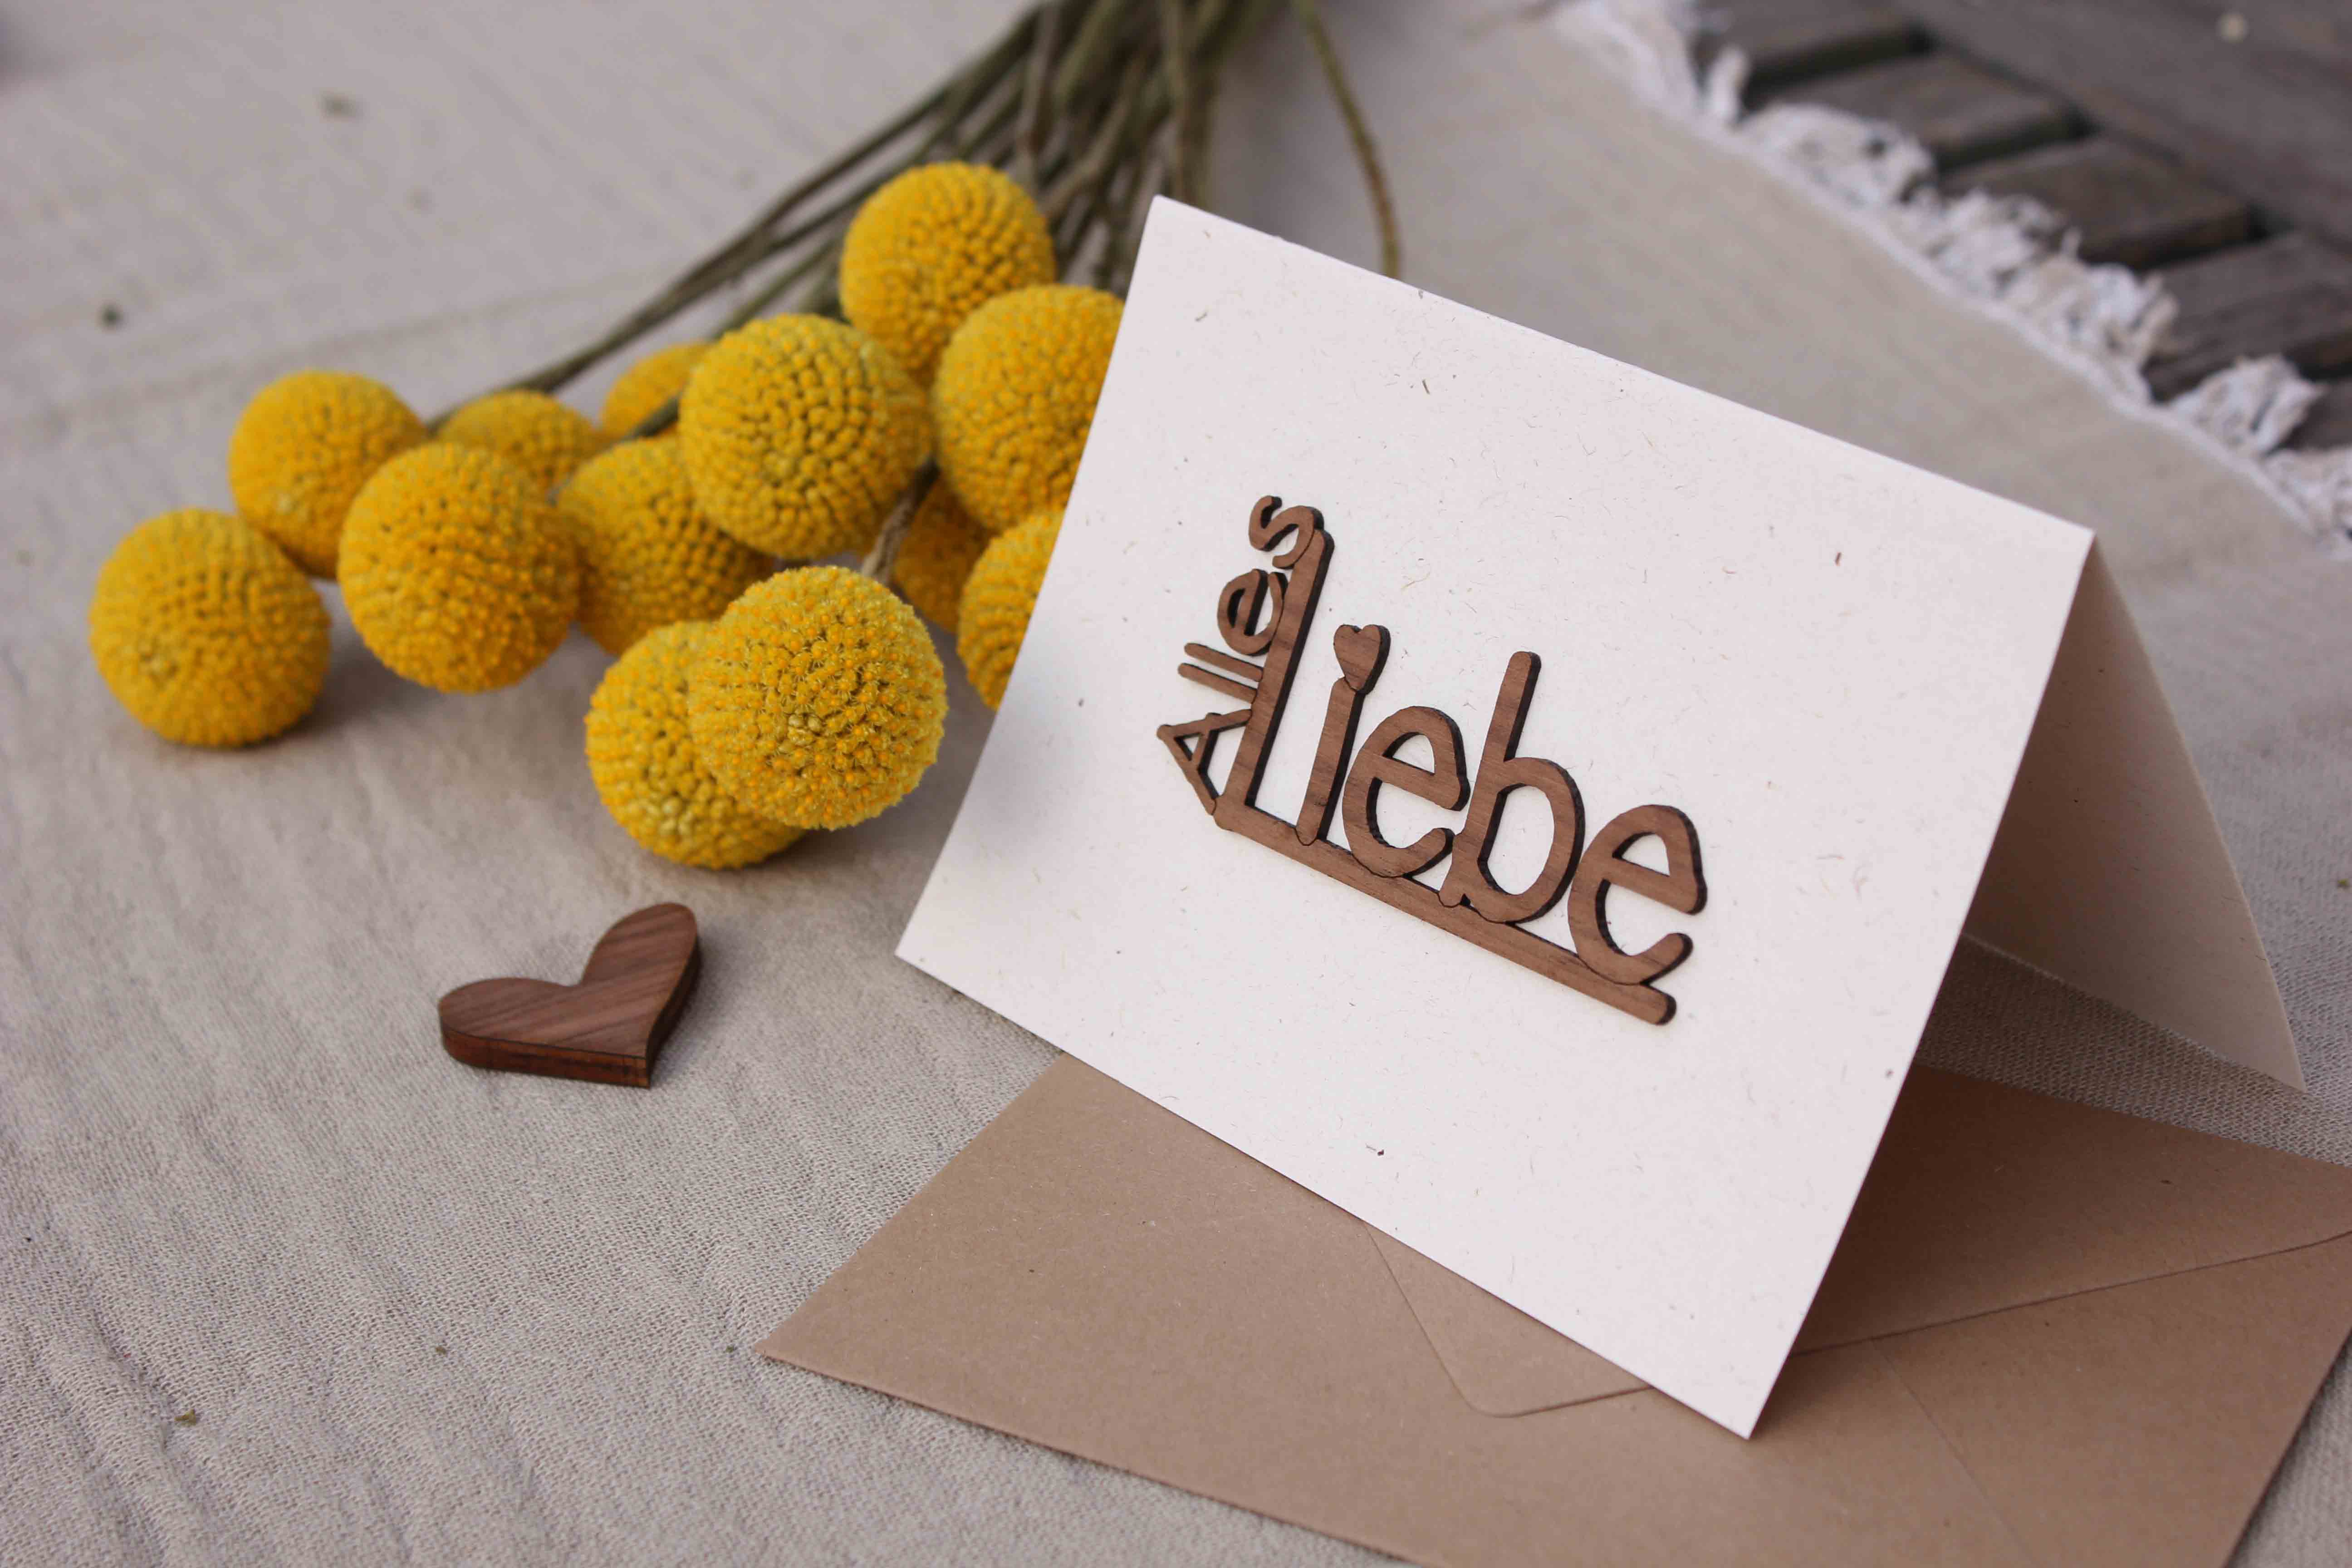 Holzgrusskarten - Papierkarte mit Schriftzug "Alles Liebe" aus Nuss, Geschenkkarte, Dankeskarte